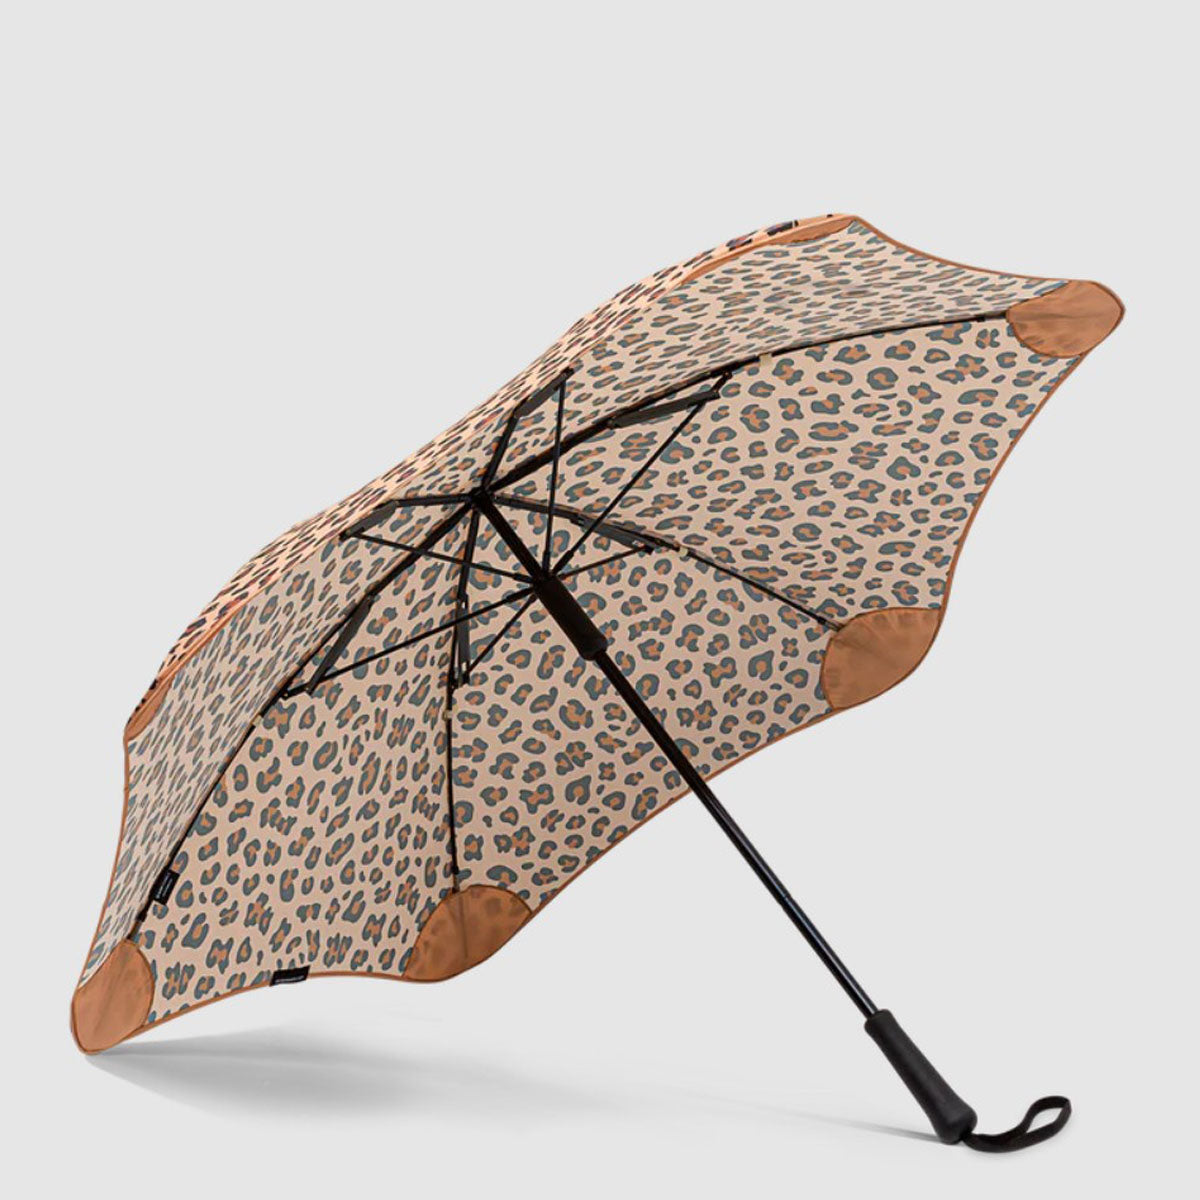 Blunt Classic 2.0 Umbrella - Leopard Safari